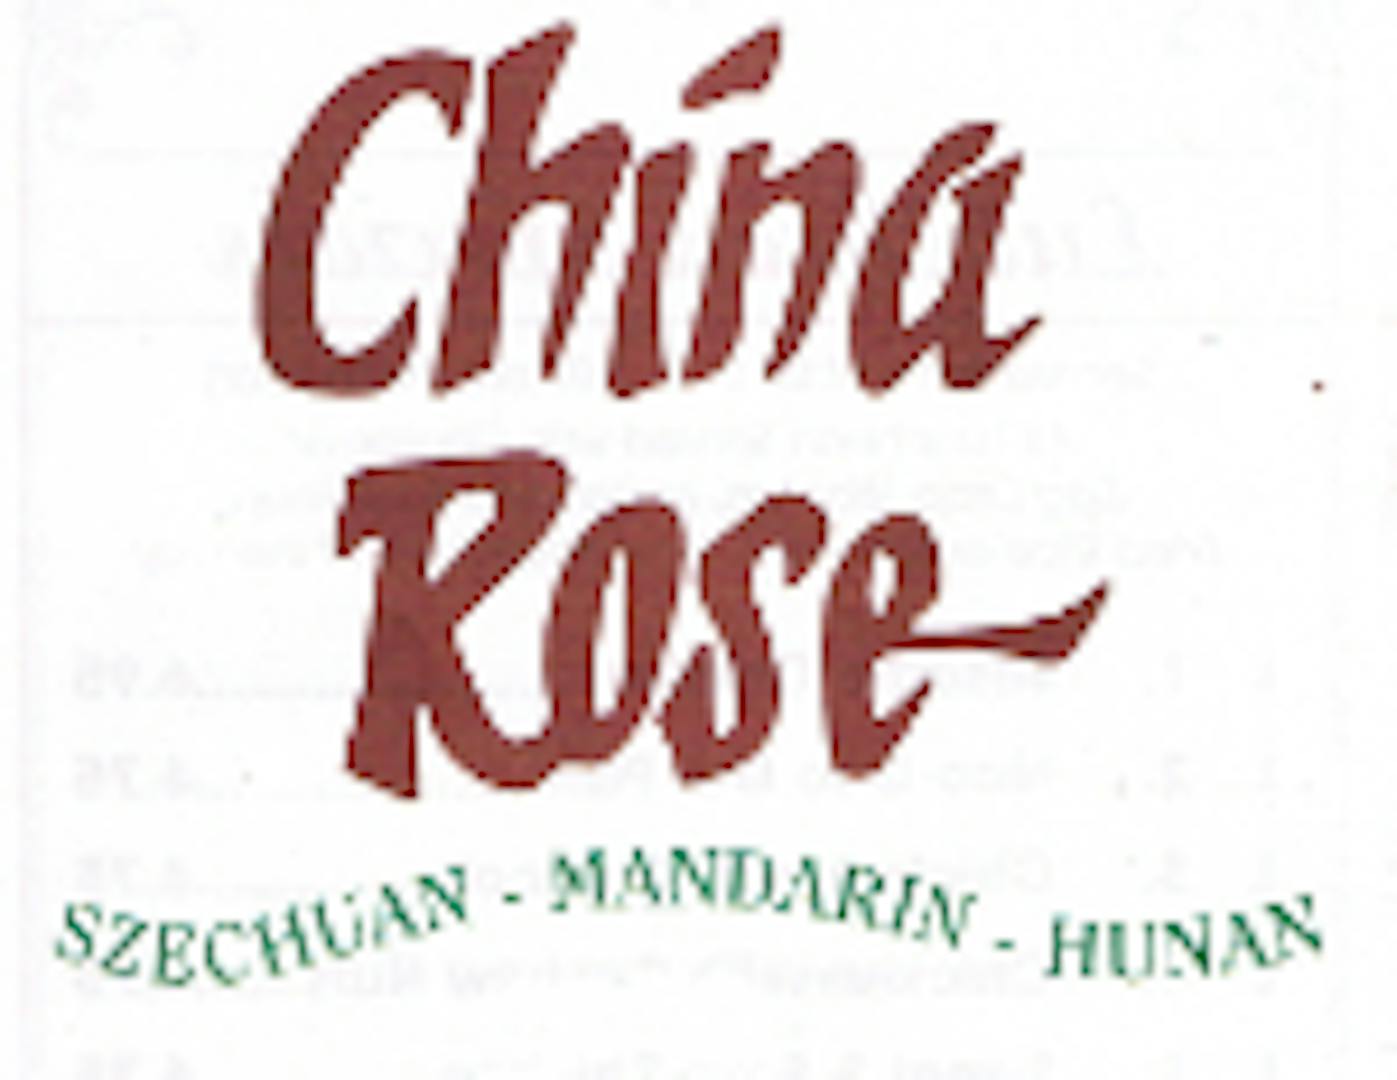 China Rose